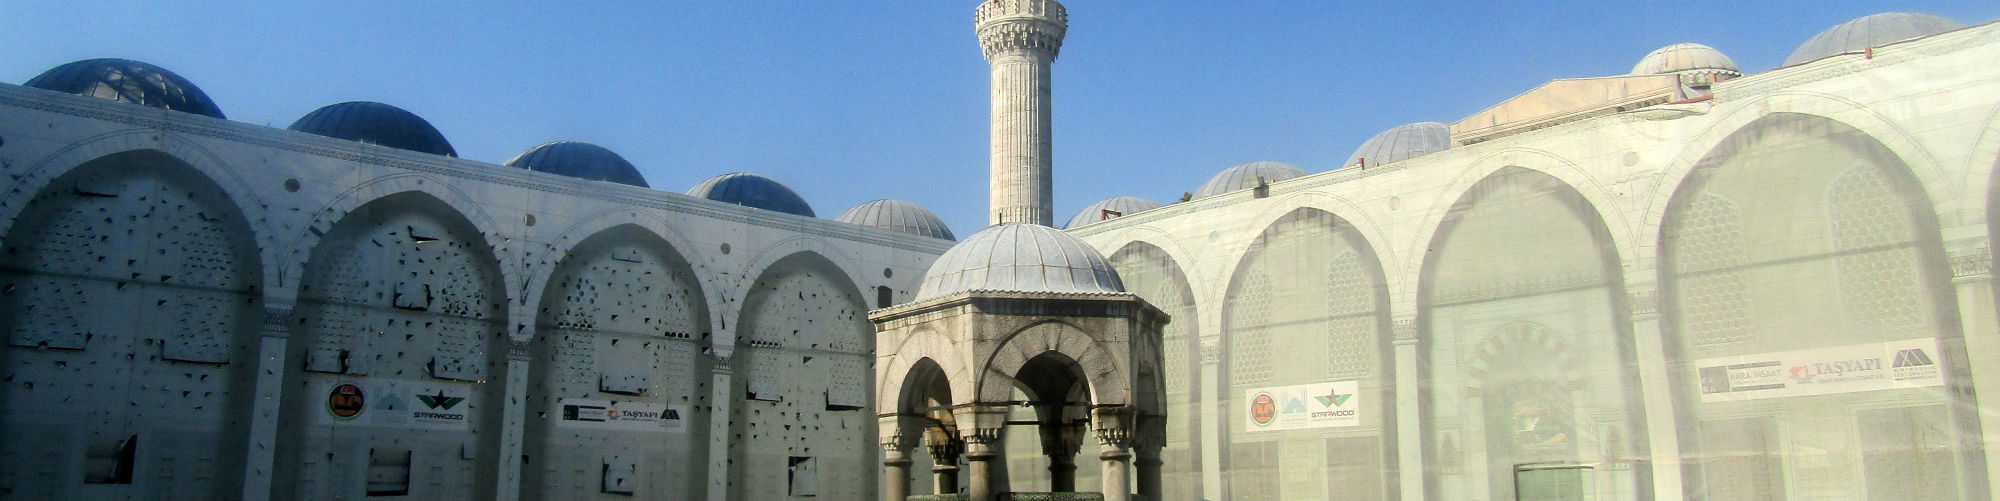 Blue Mosque, Sultanamet Square, Intanbul